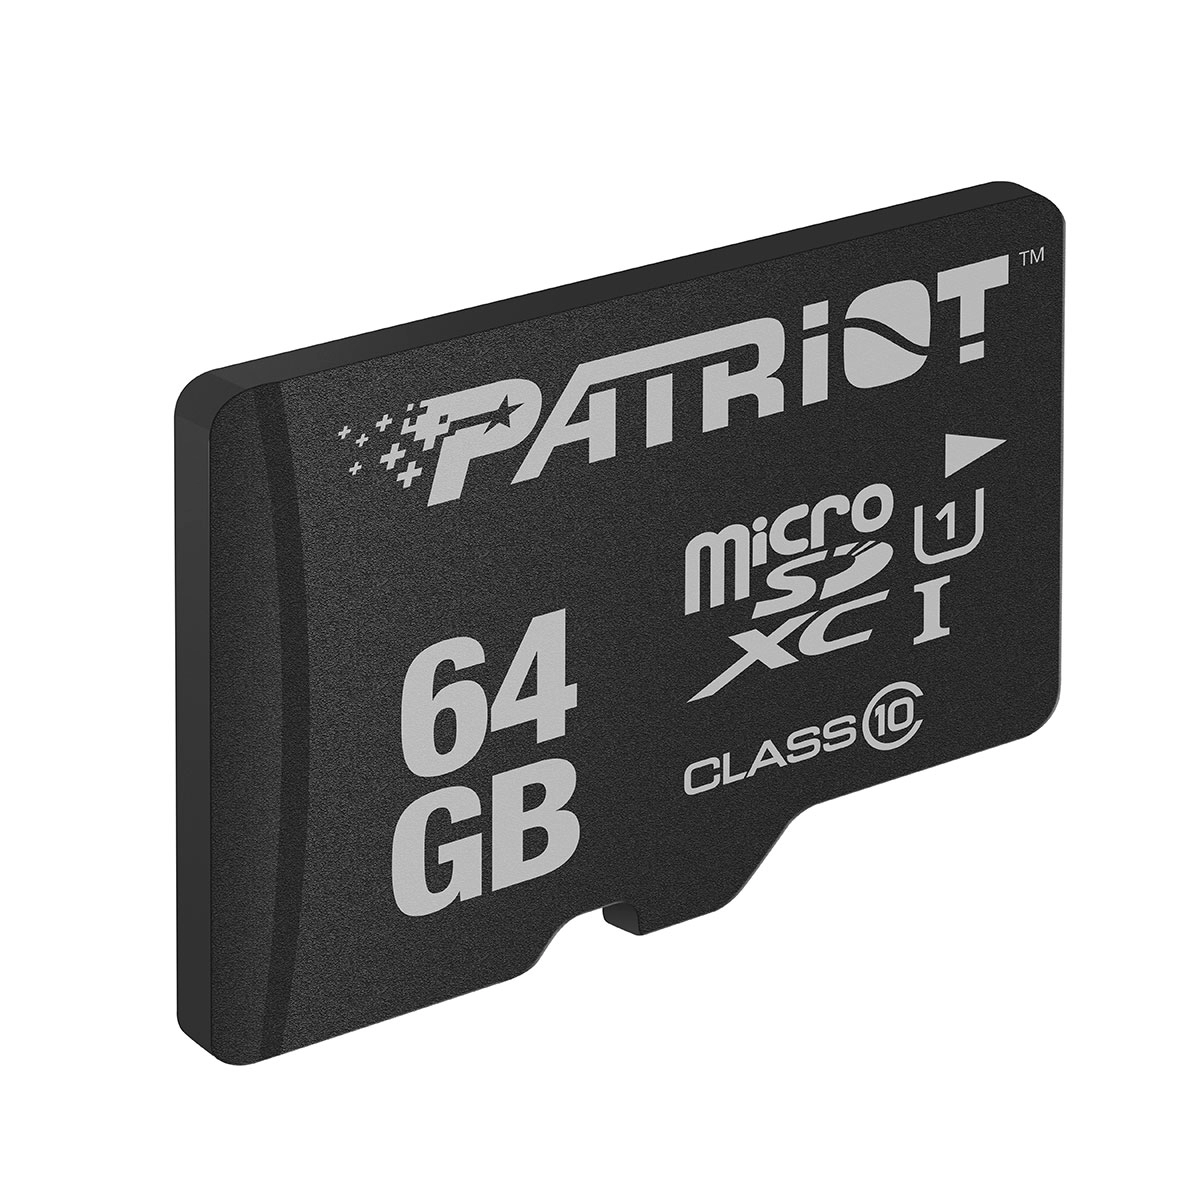 64GB microSD Class10 U1 UHS-I  Patriot LX Series microSD, Up to 80MB/s